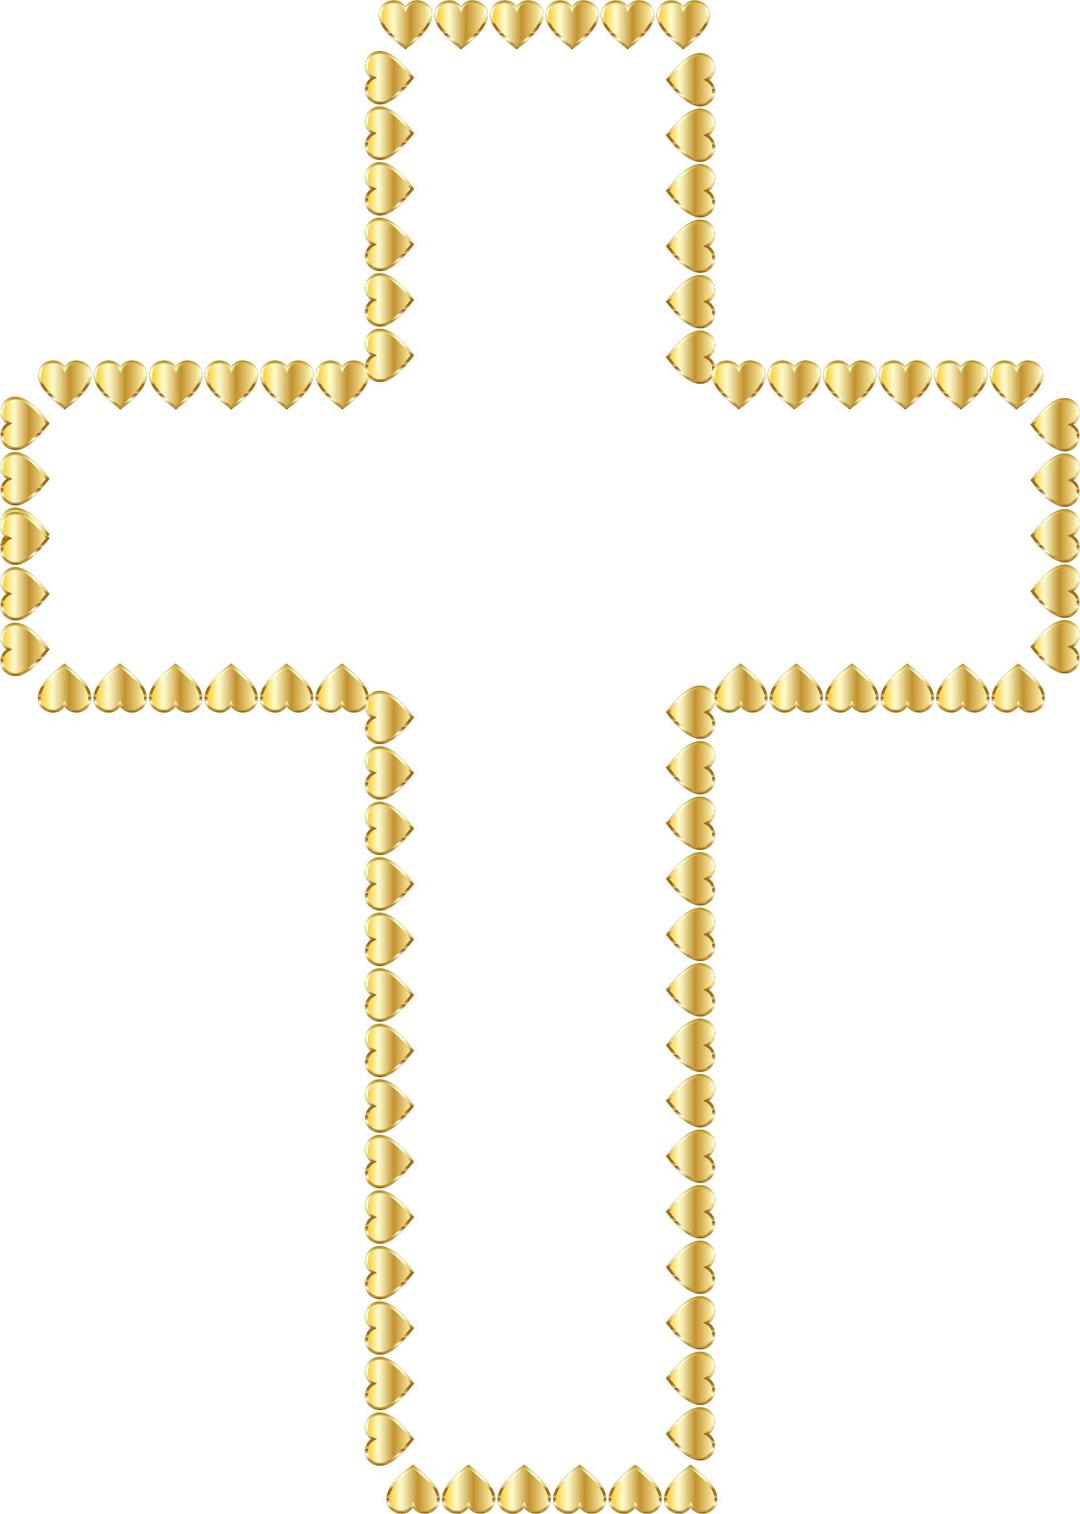 Golden Cross Hearts No Background png transparent